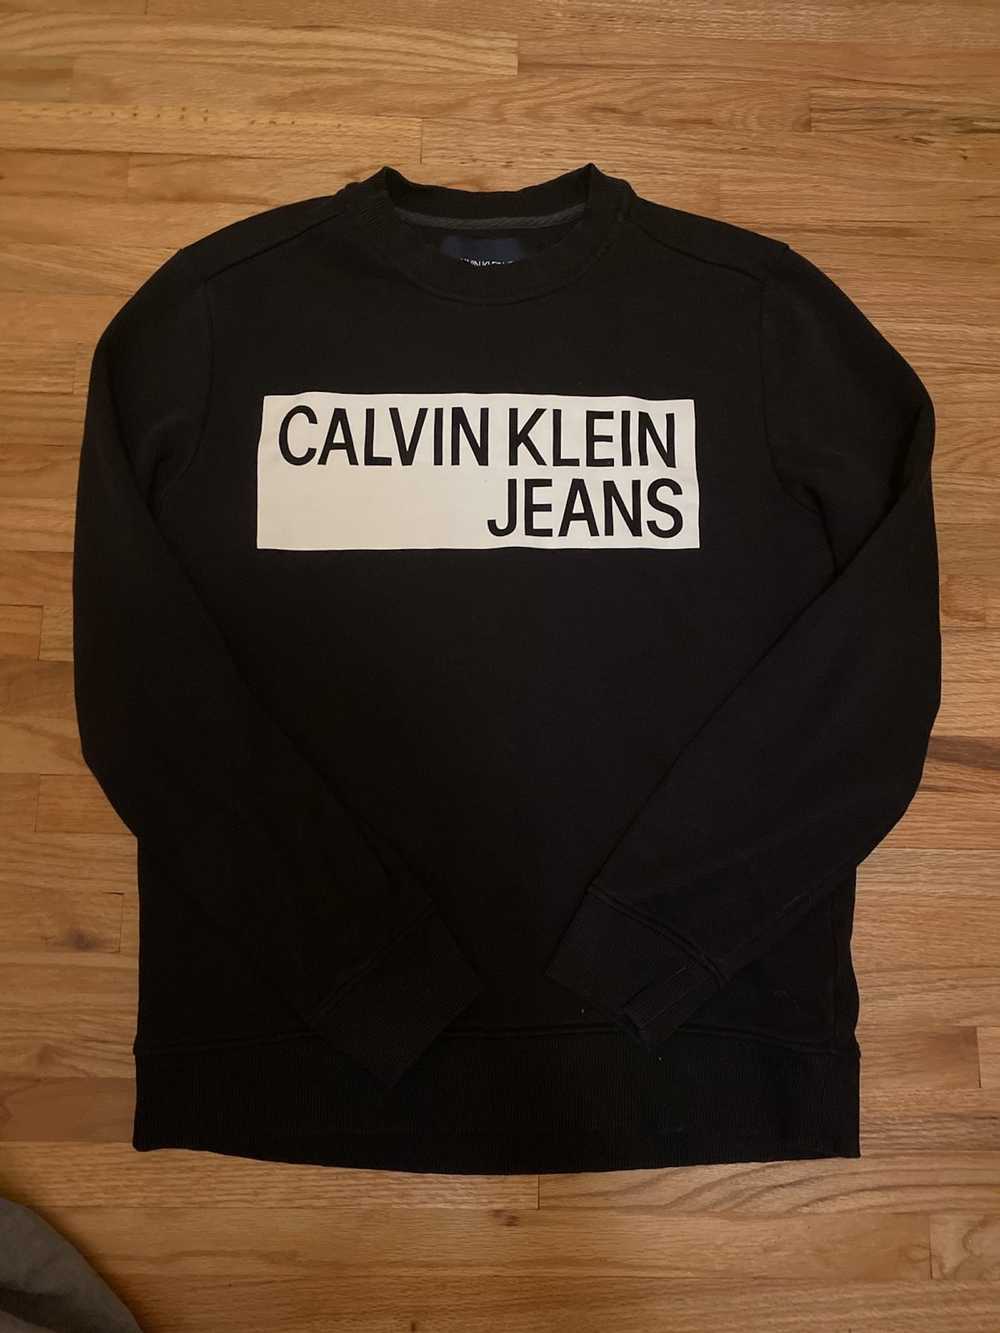 Calvin Klein Calvin Klein Jeans Crewneck Sweater - image 1